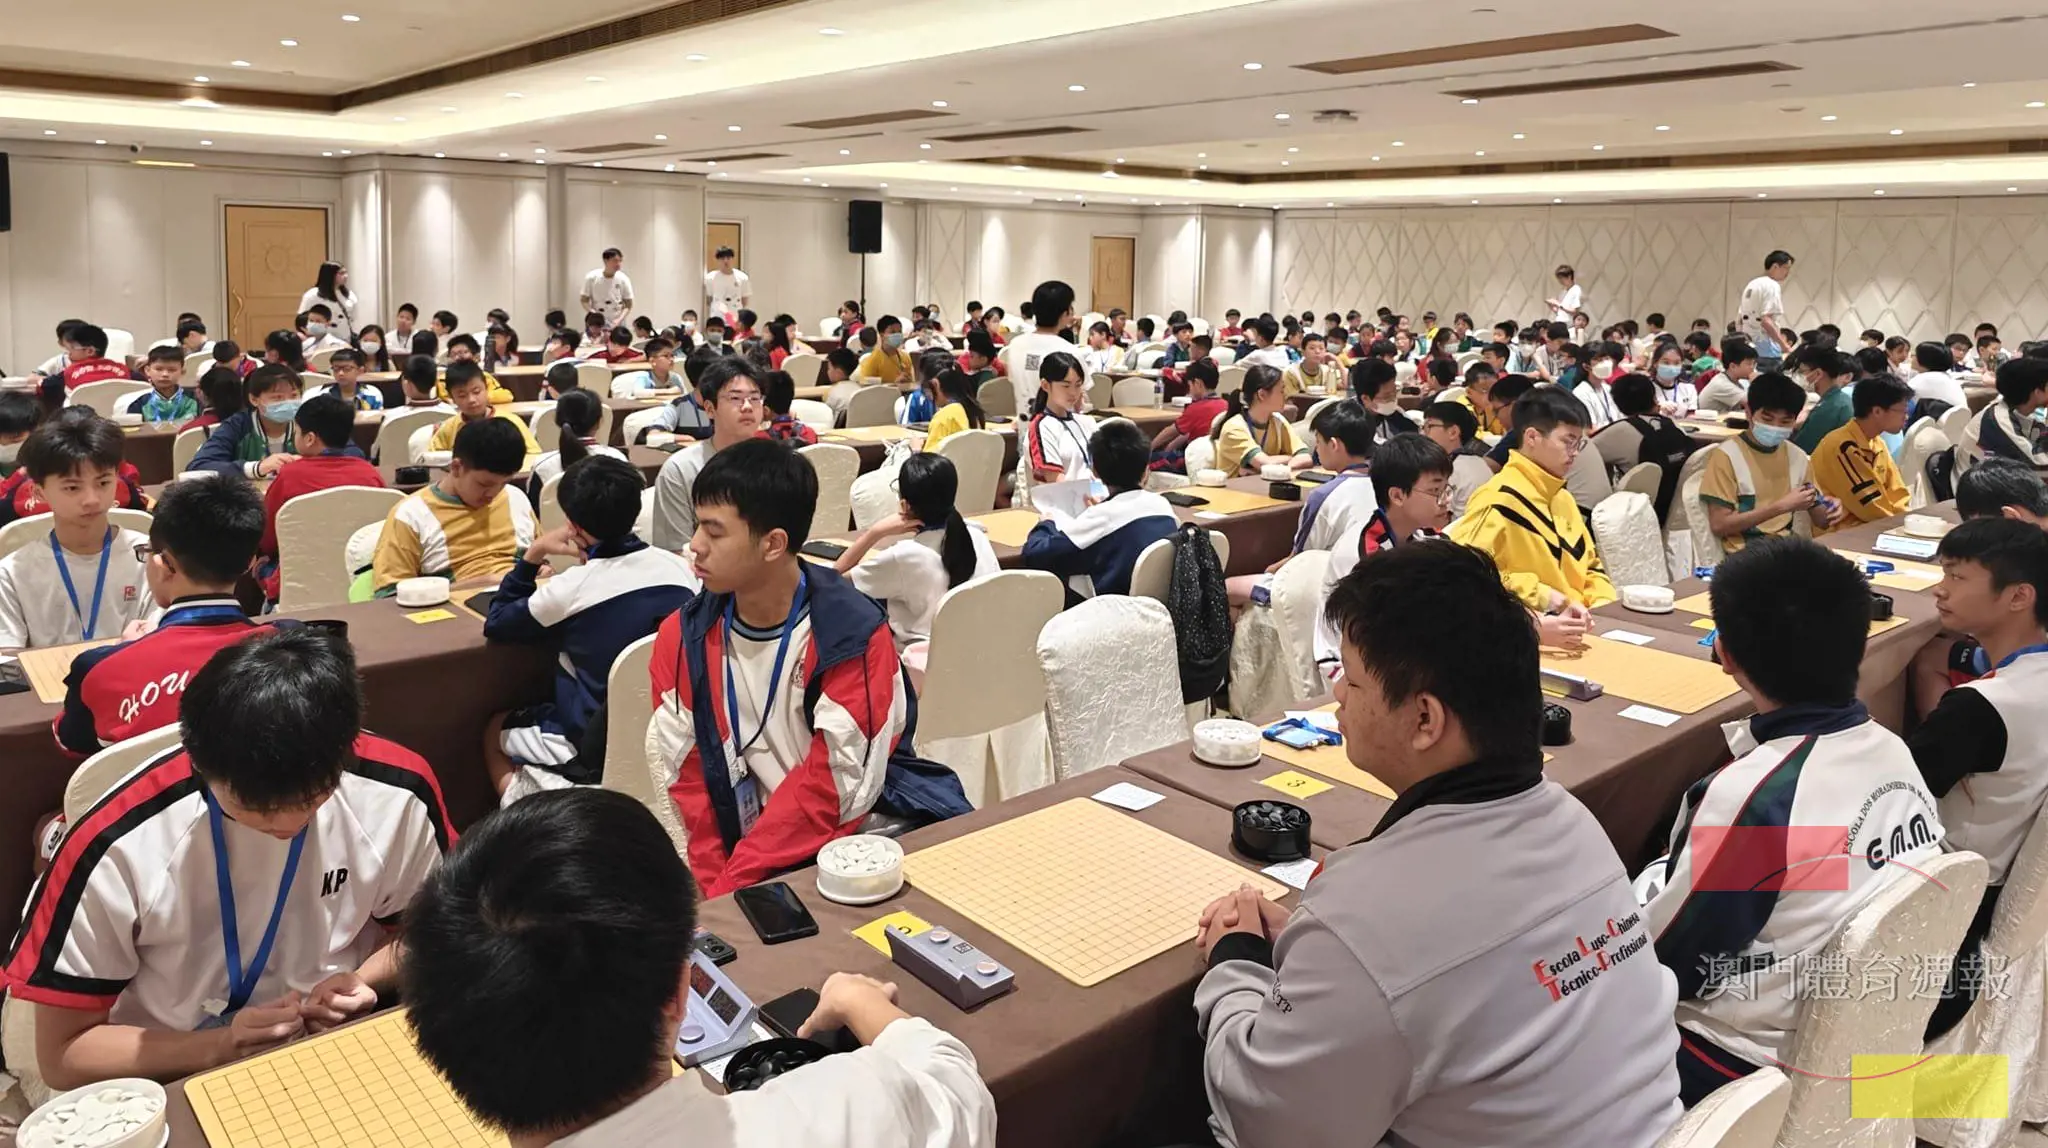 B5 日前舉辦的校際圍棋賽吸引愈300 棋手參加。.jpg